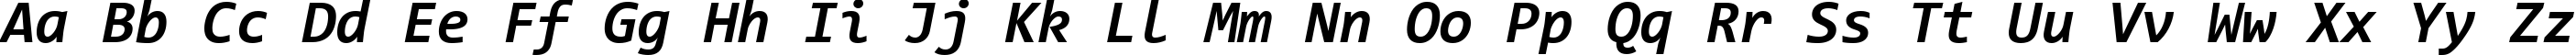 Пример написания английского алфавита шрифтом Consolas Bold Italic